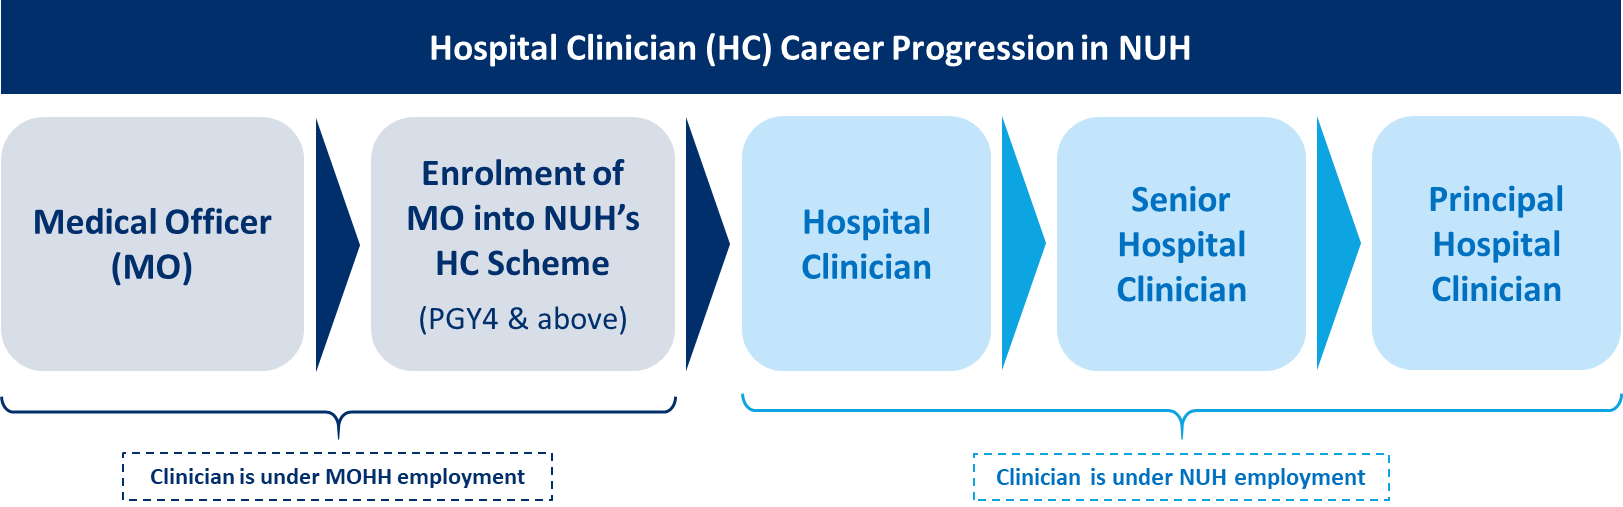 Hospital Clinician Career Progression in NUH